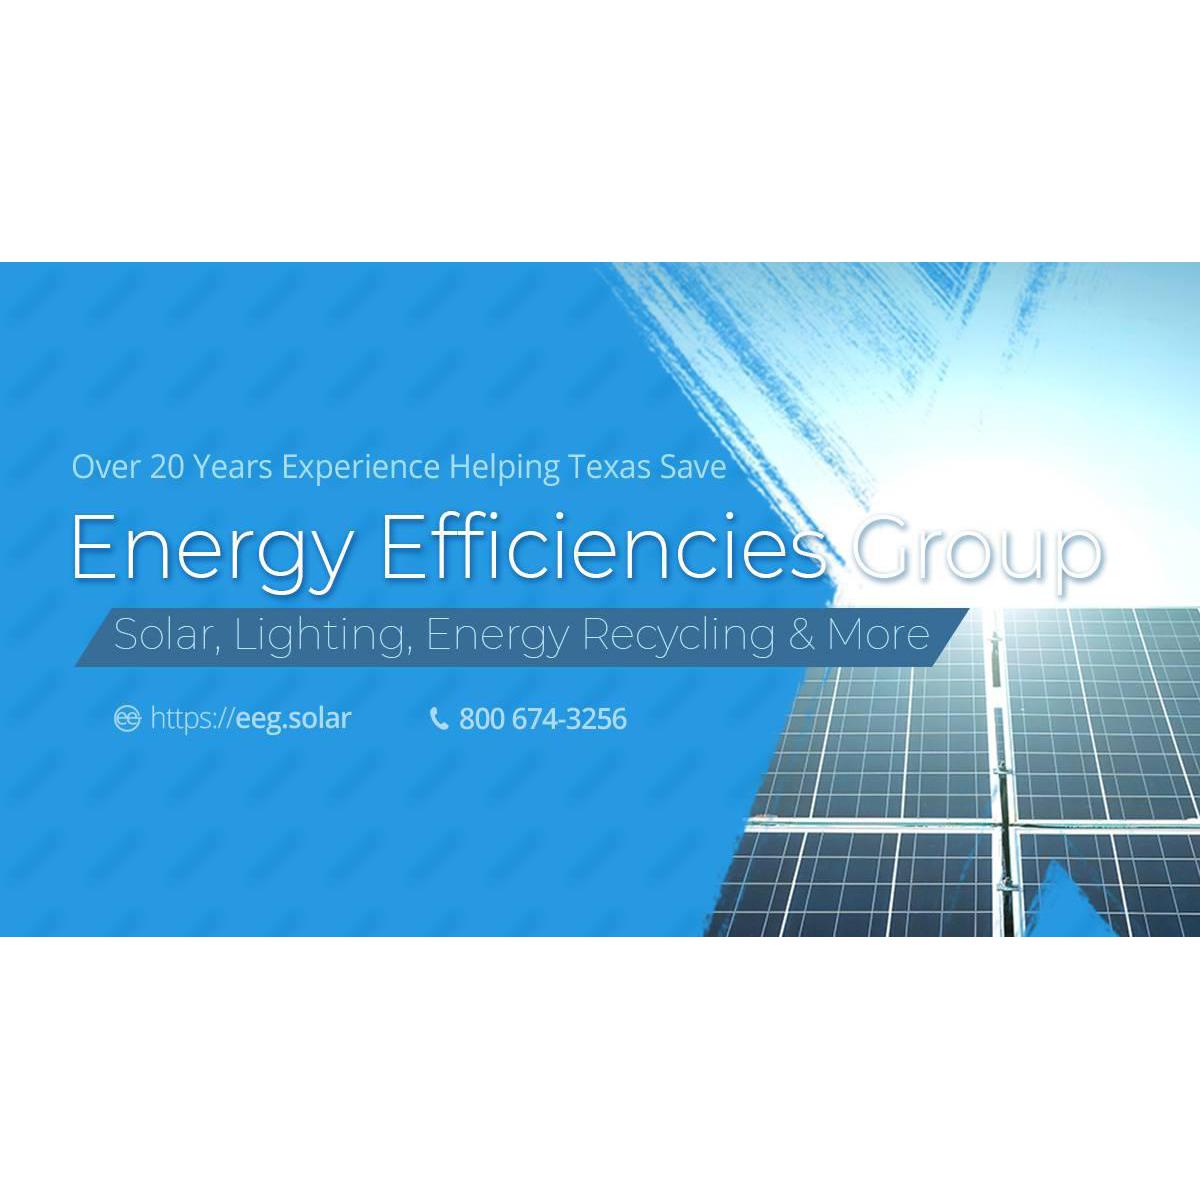 Energy Efficiencies Group Photo